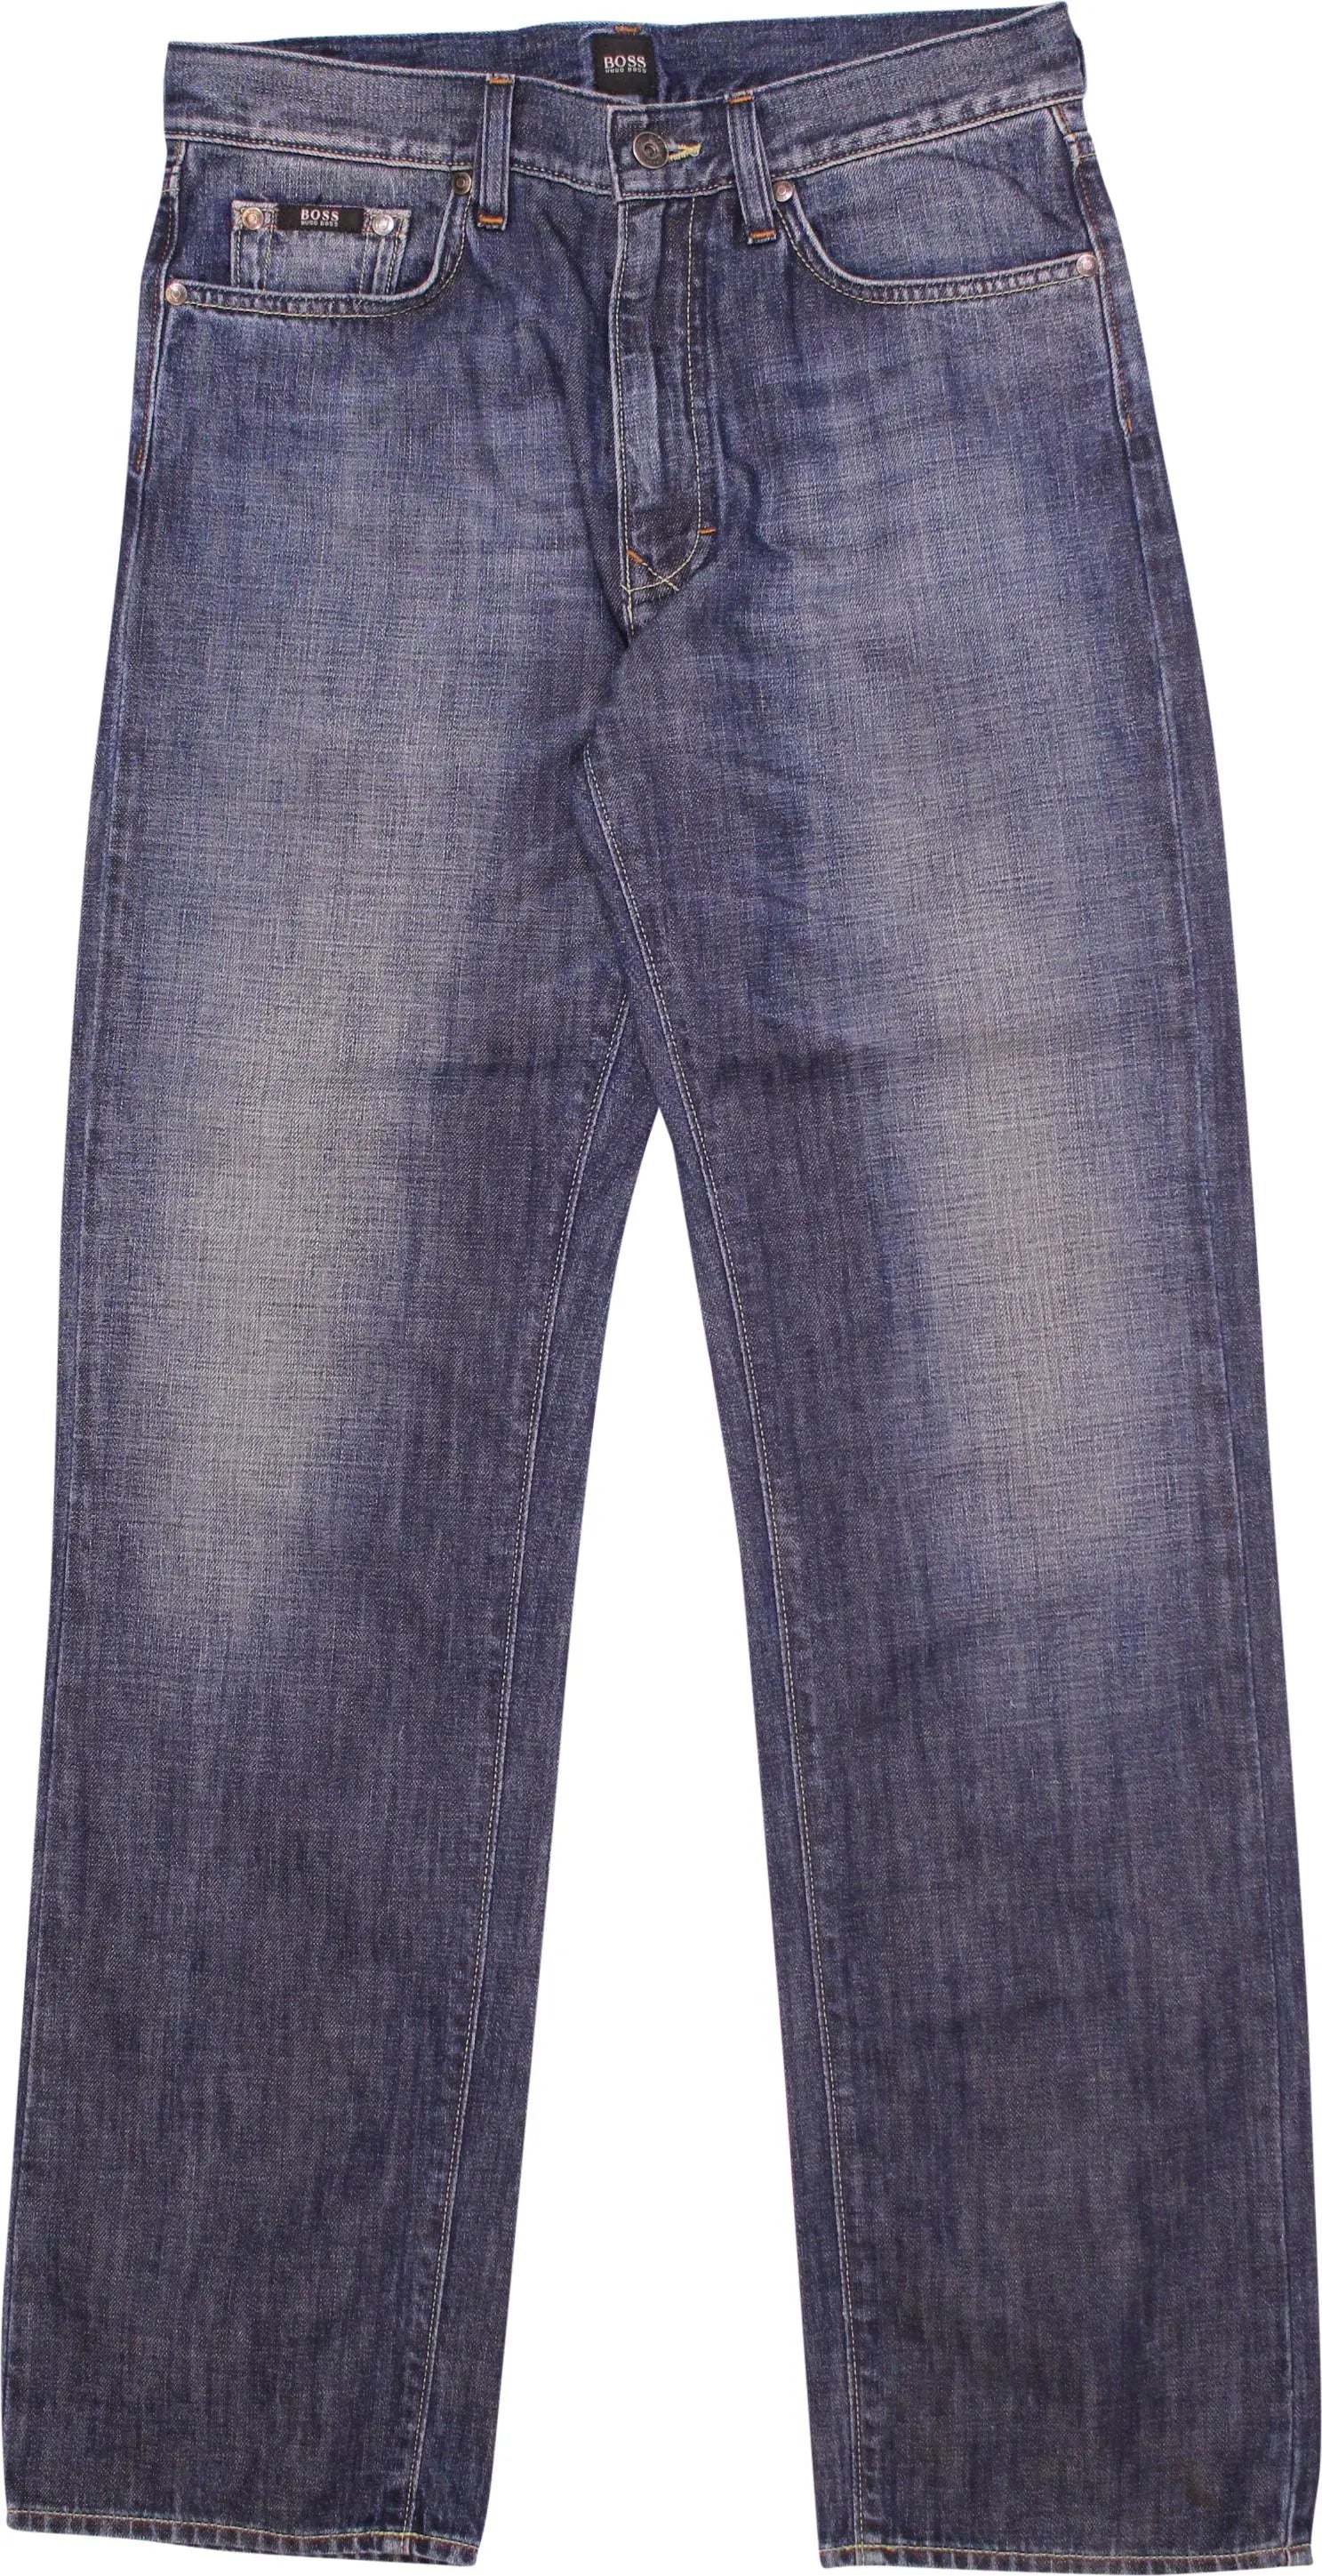 Hugo Boss - Hugo Boss Regular Fit Jeans- ThriftTale.com - Vintage and second handclothing